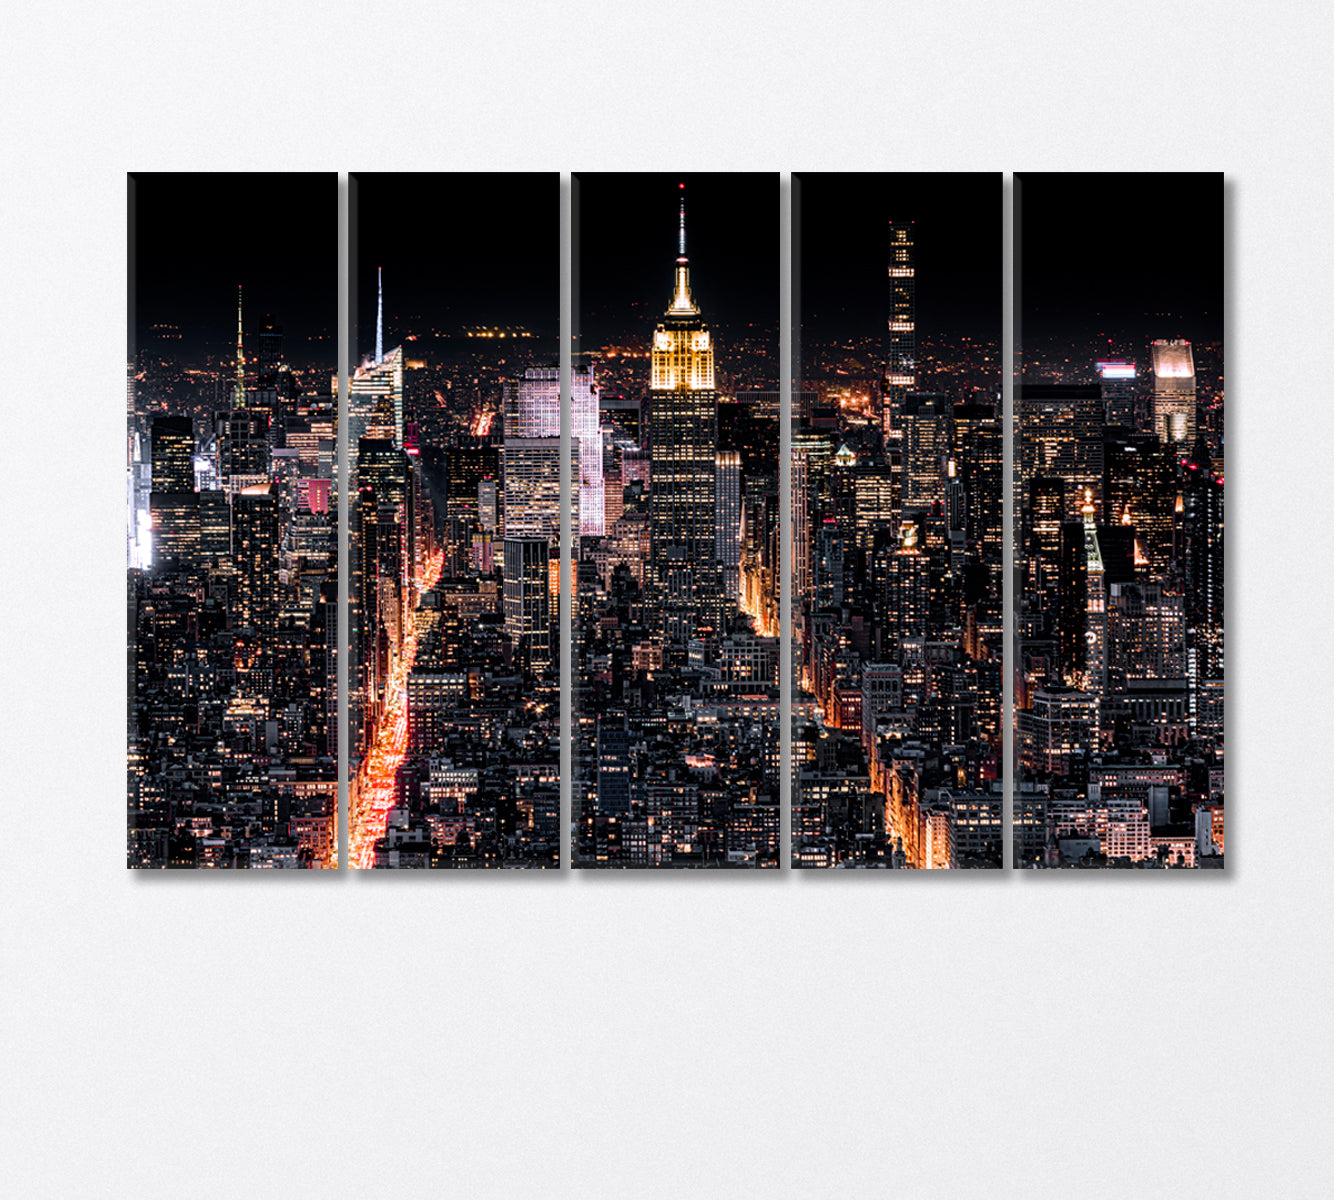 Night New York with Illuminated Avenues Canvas Print-Canvas Print-CetArt-5 Panels-36x24 inches-CetArt